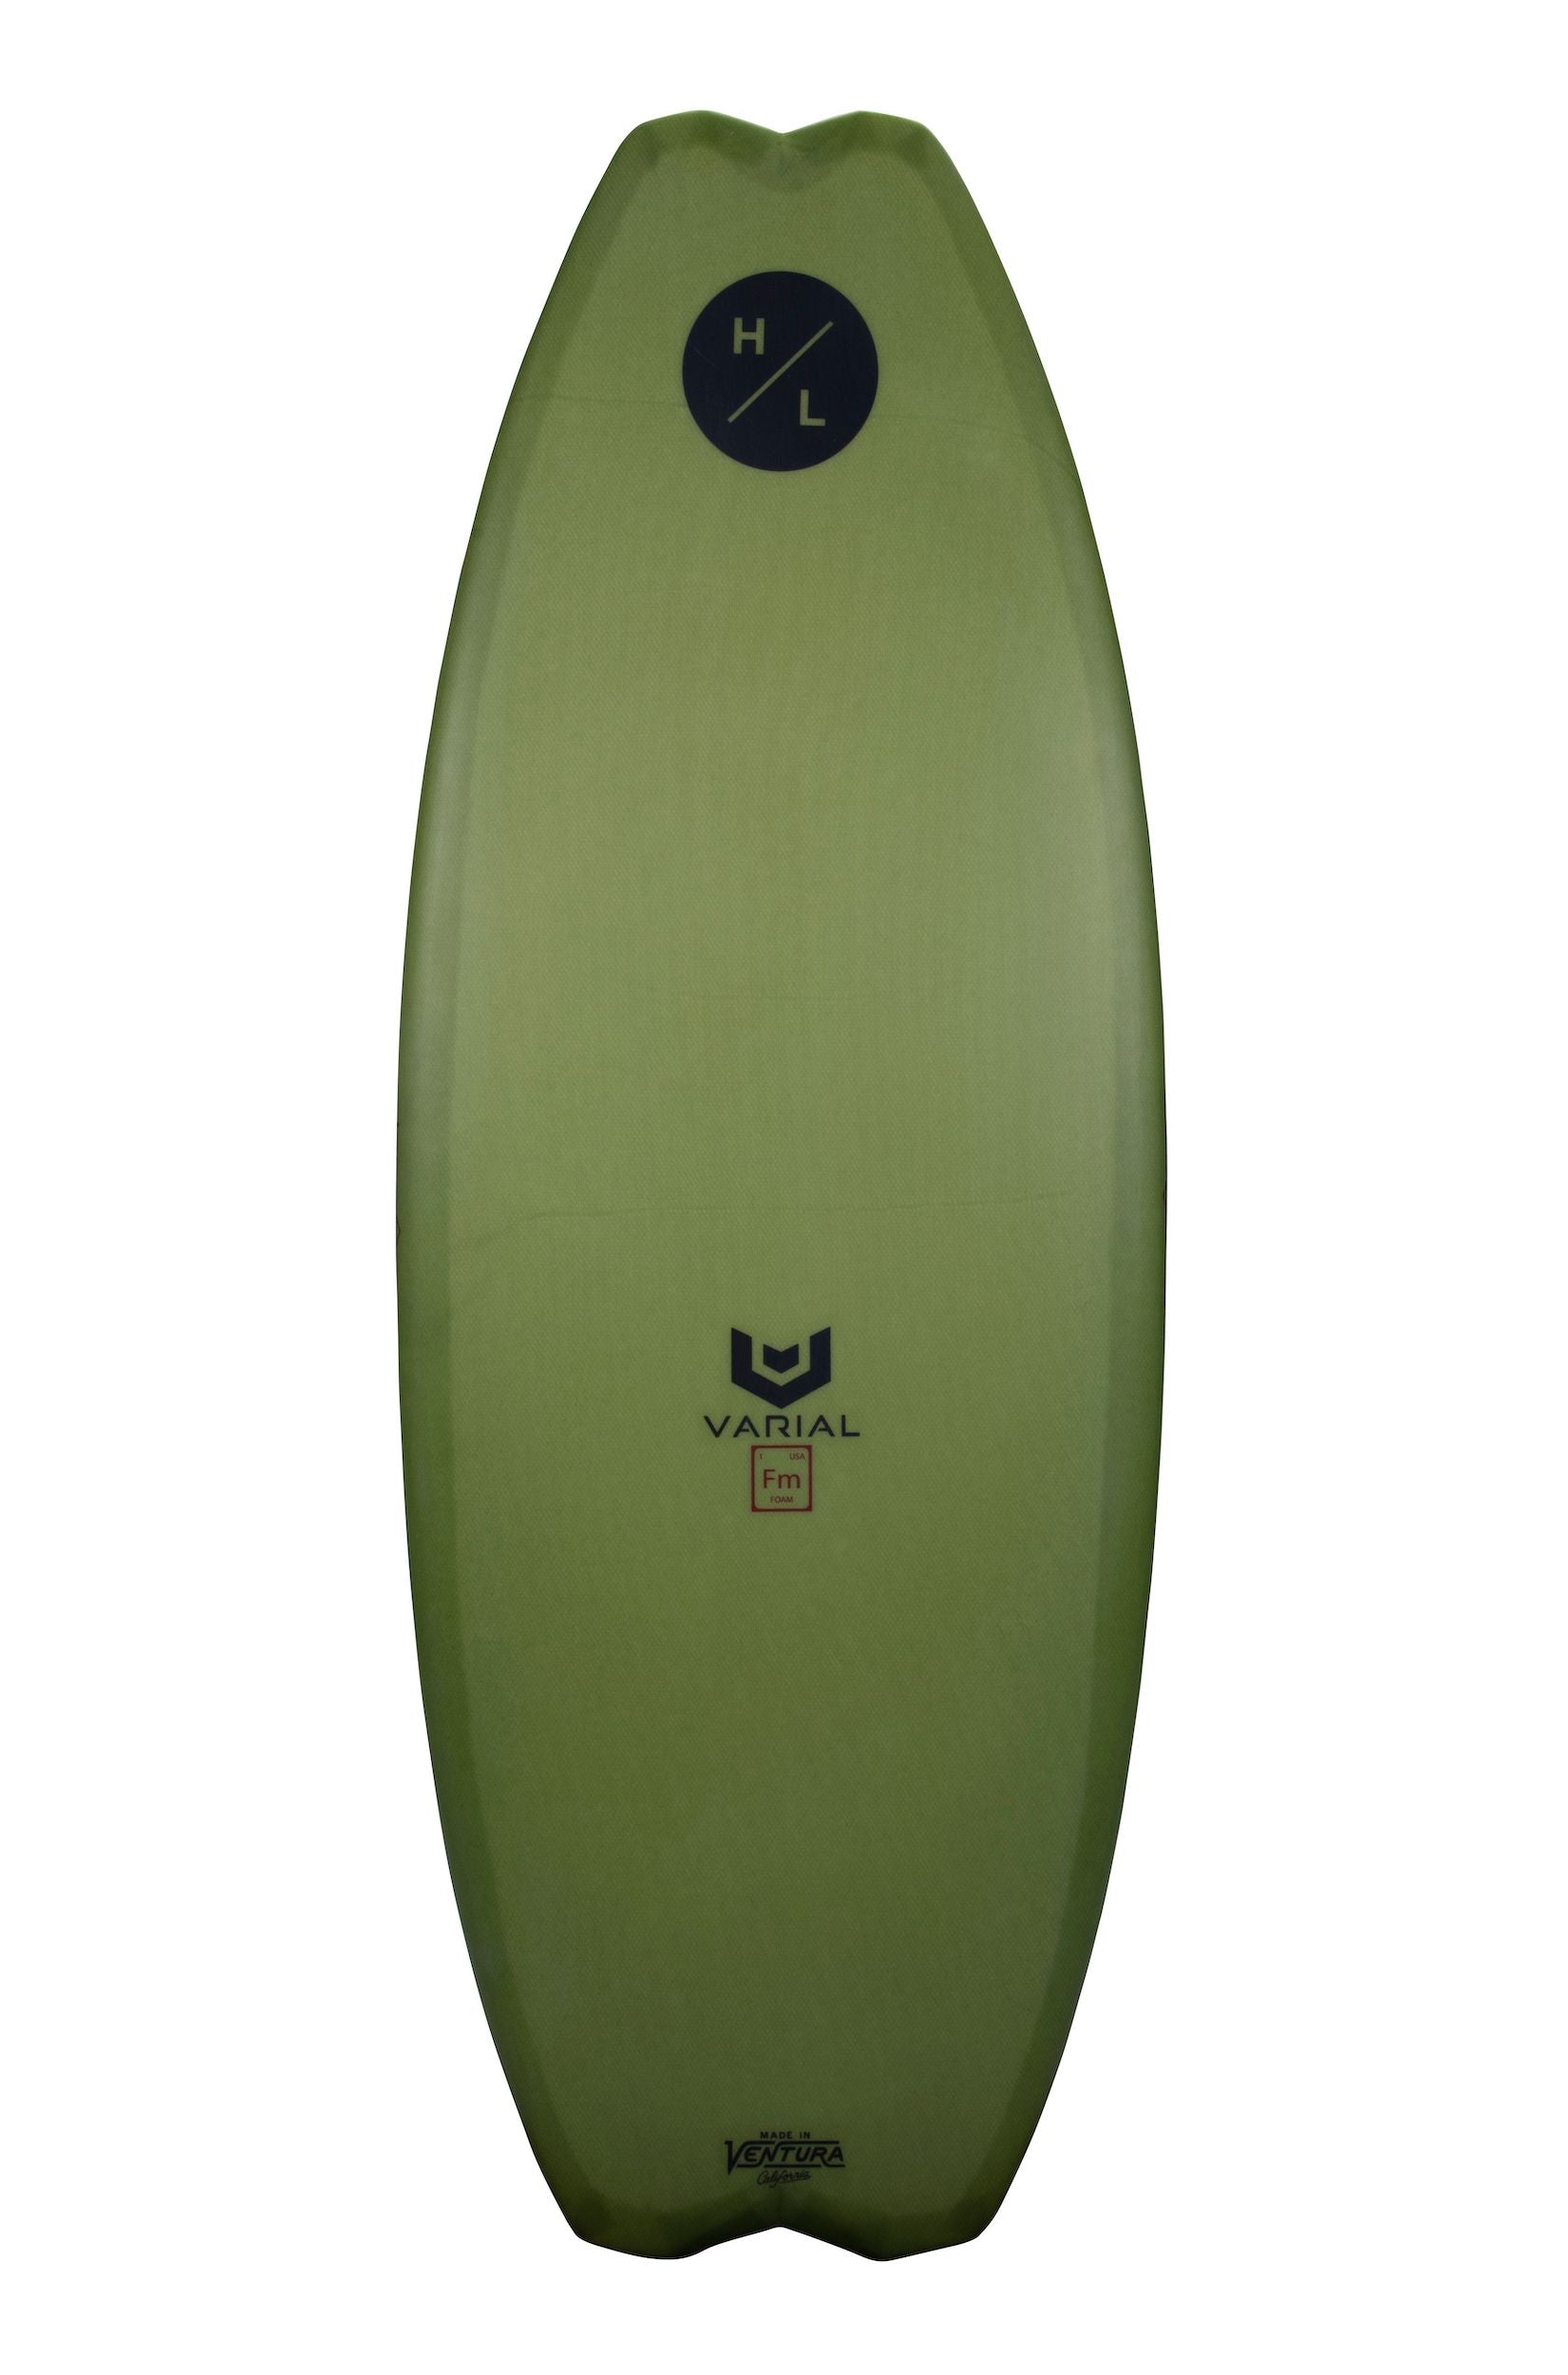 A green Hyperlite 2024 Varial ARC Wakesurf Board with a black Butch Customs logo on it.